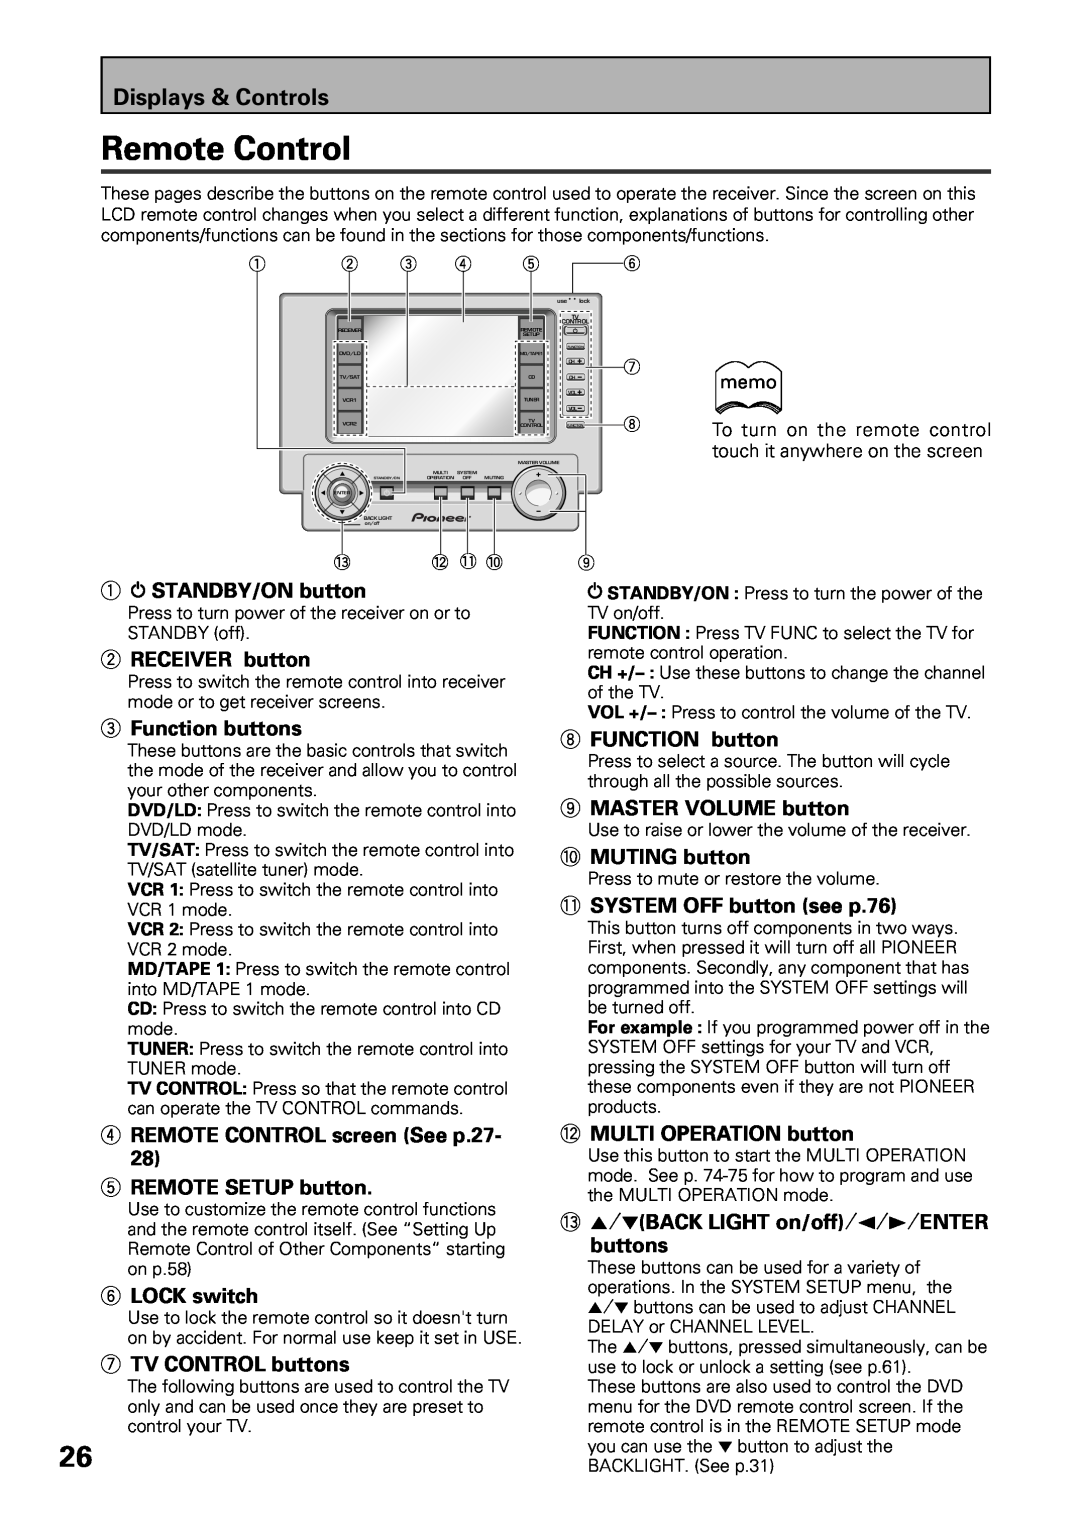 Pioneer VSX-39TX manual Remote Control, Displays & Controls 